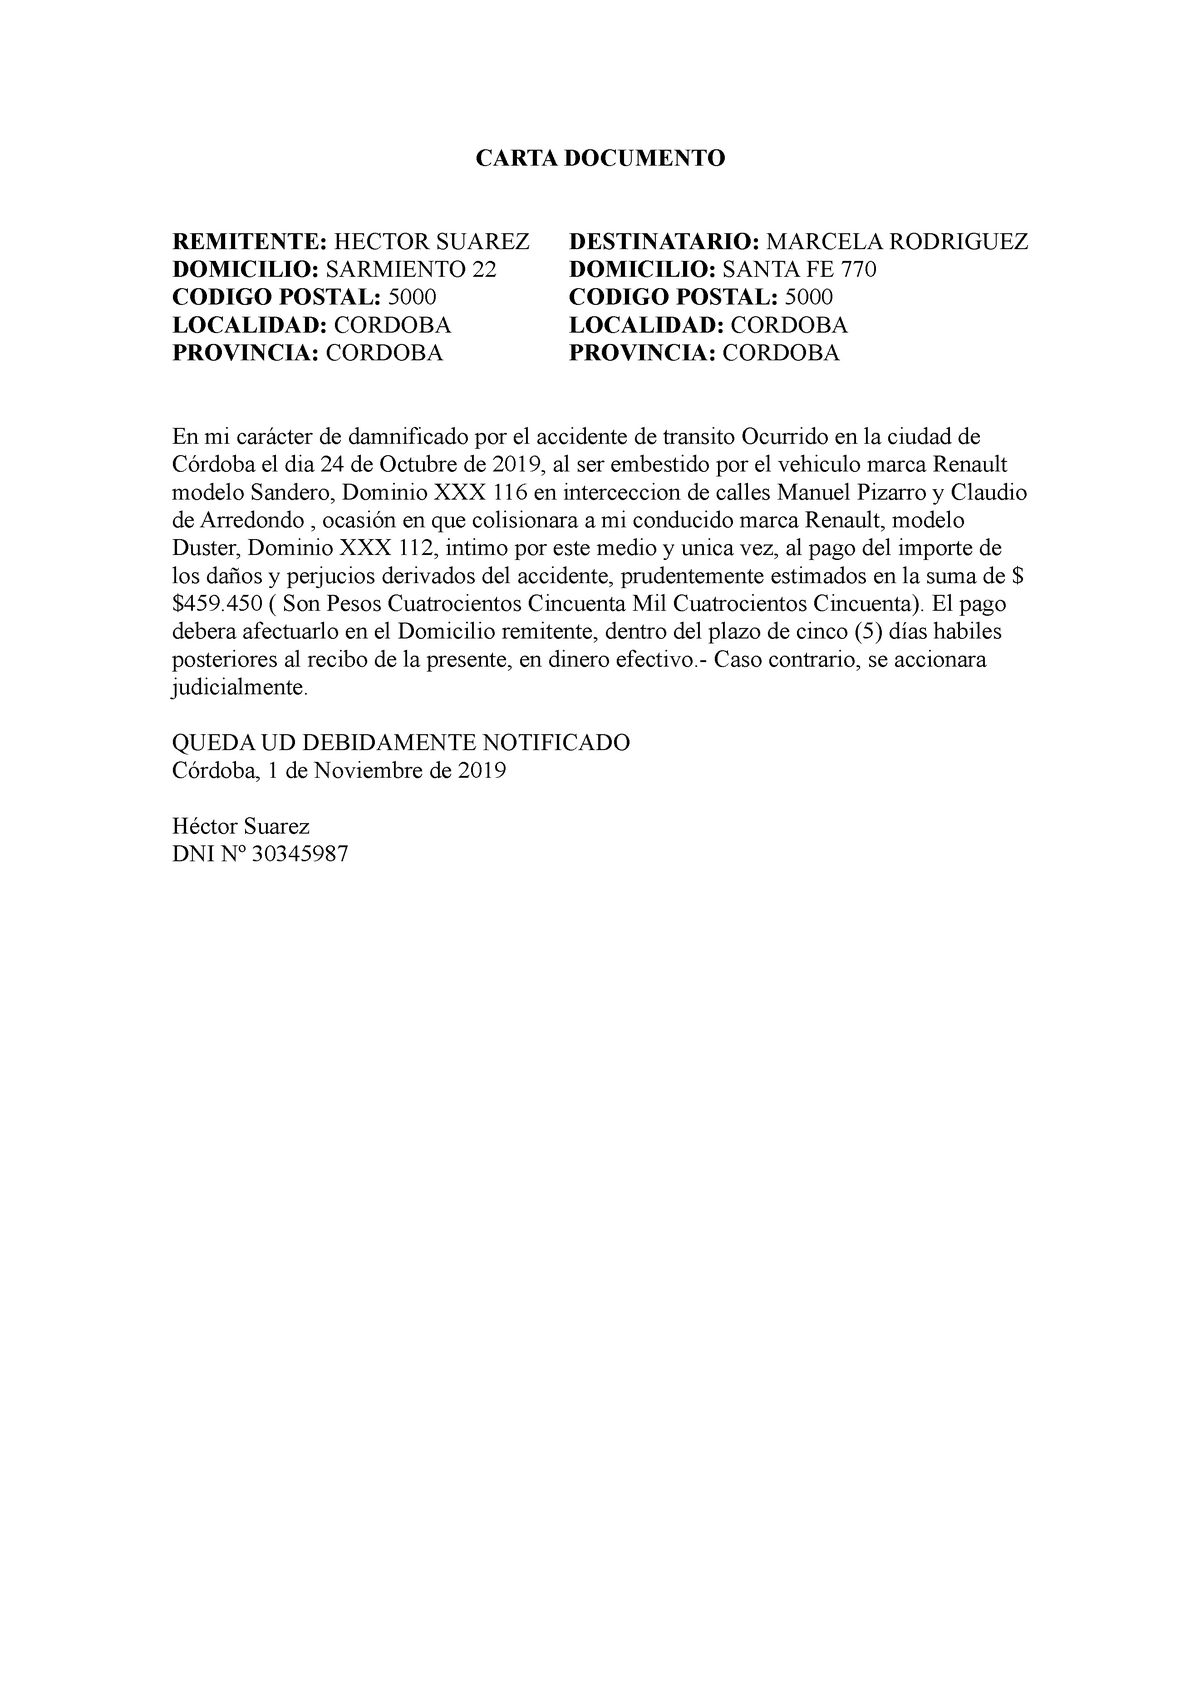 Carta Documento TP2 - CARTA DOCUMENTO REMITENTE: HECTOR SUAREZ DOMICILIO:  SARMIENTO 22 CODIGO - Studocu